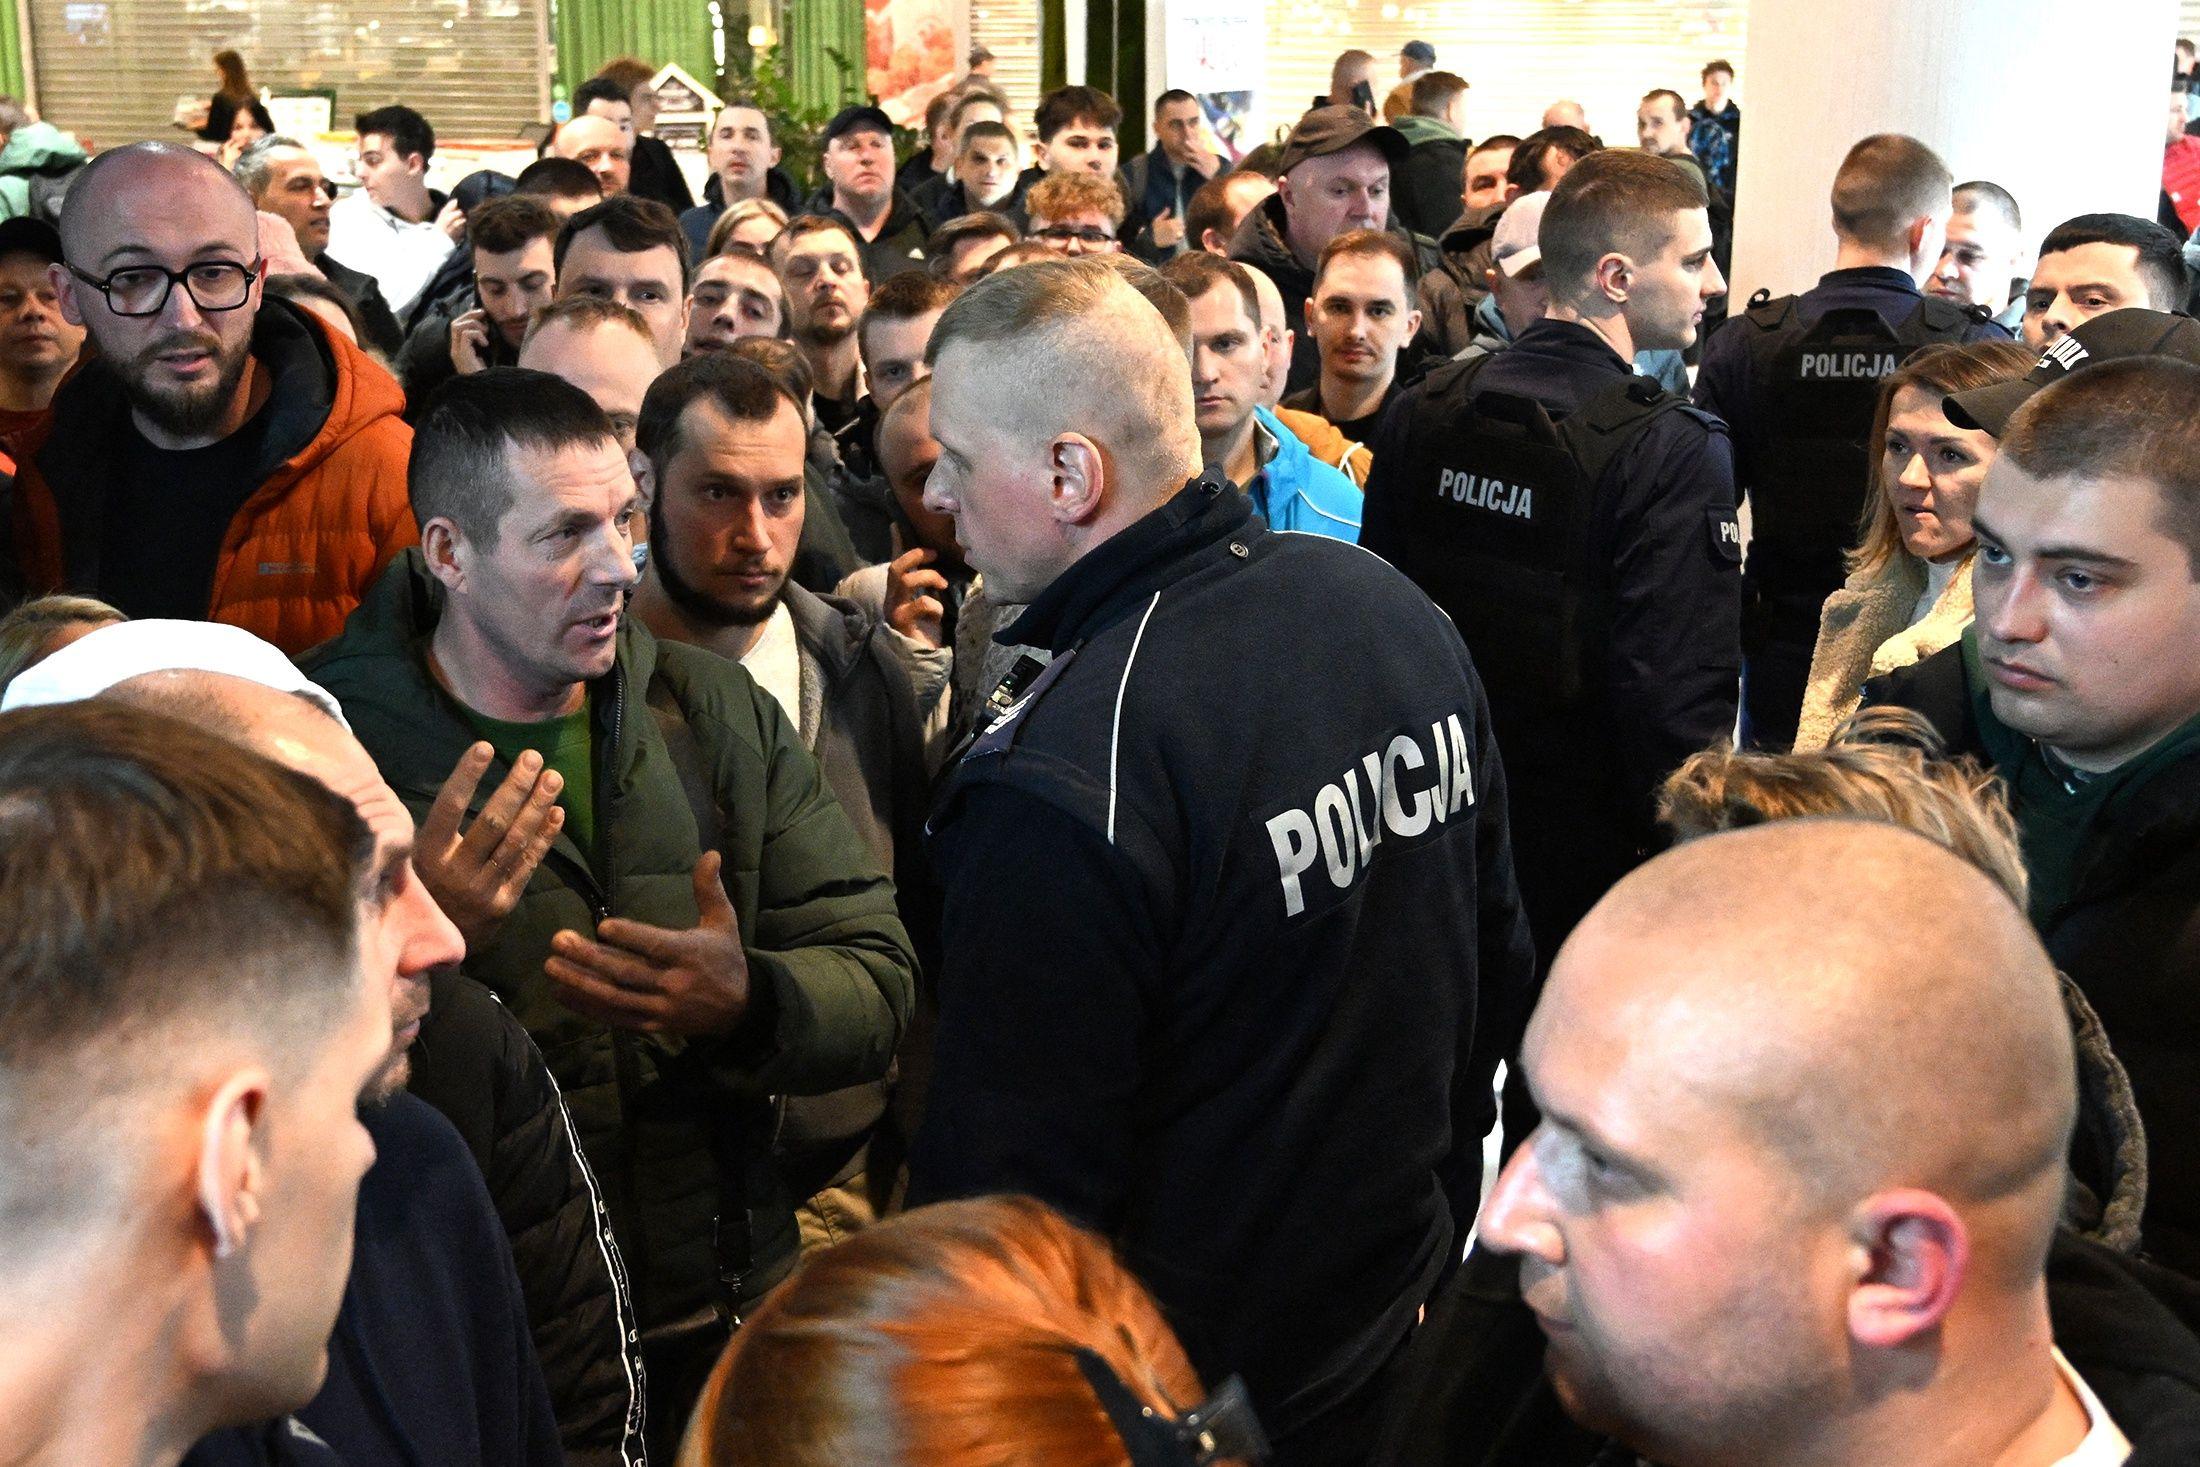 300 Ukrainians blocked passport service in Warsaw